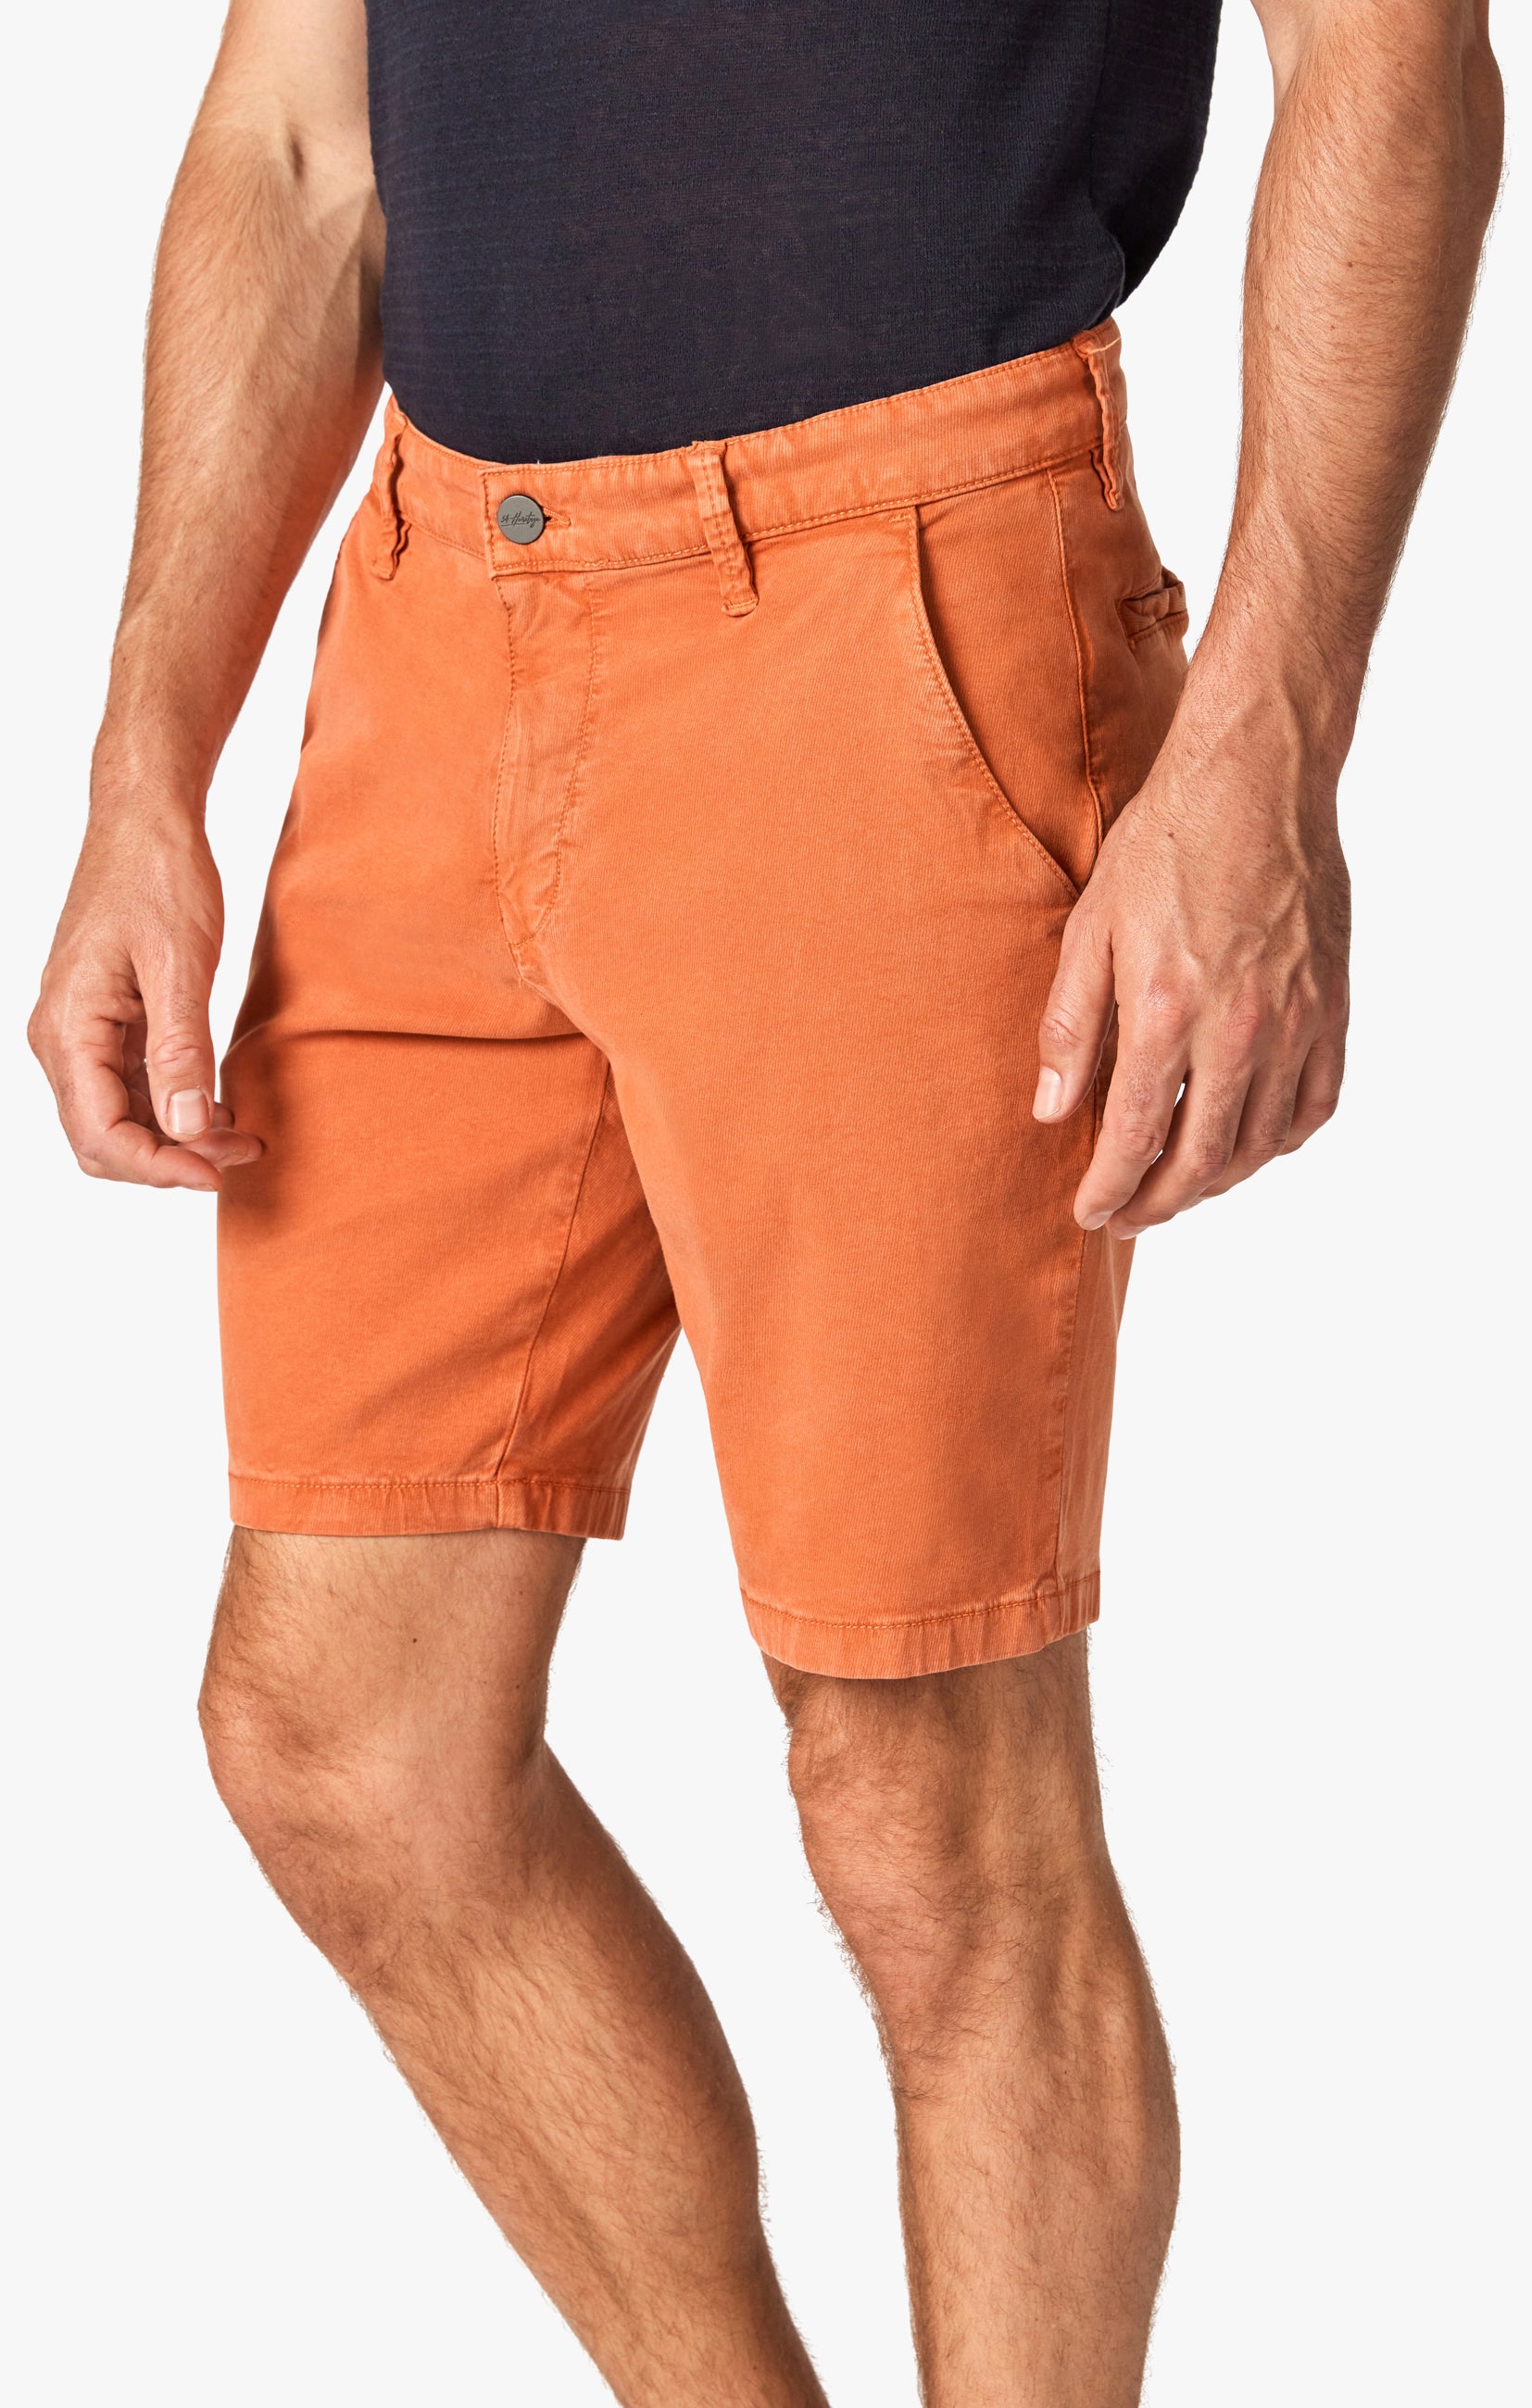 Arizona Shorts In Orange Rust Soft Touch